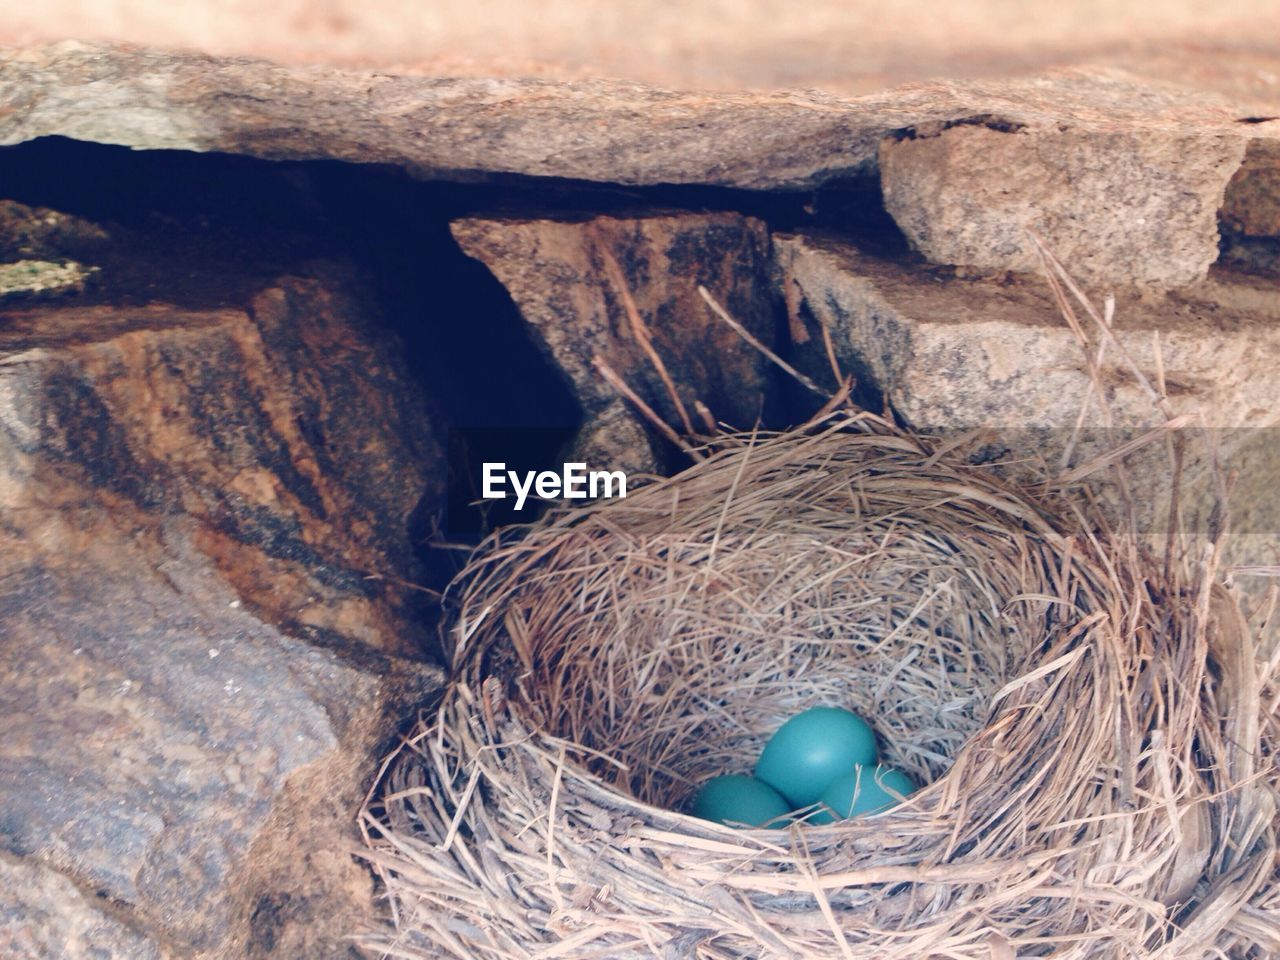 Blue eggs in nest amidst rocks